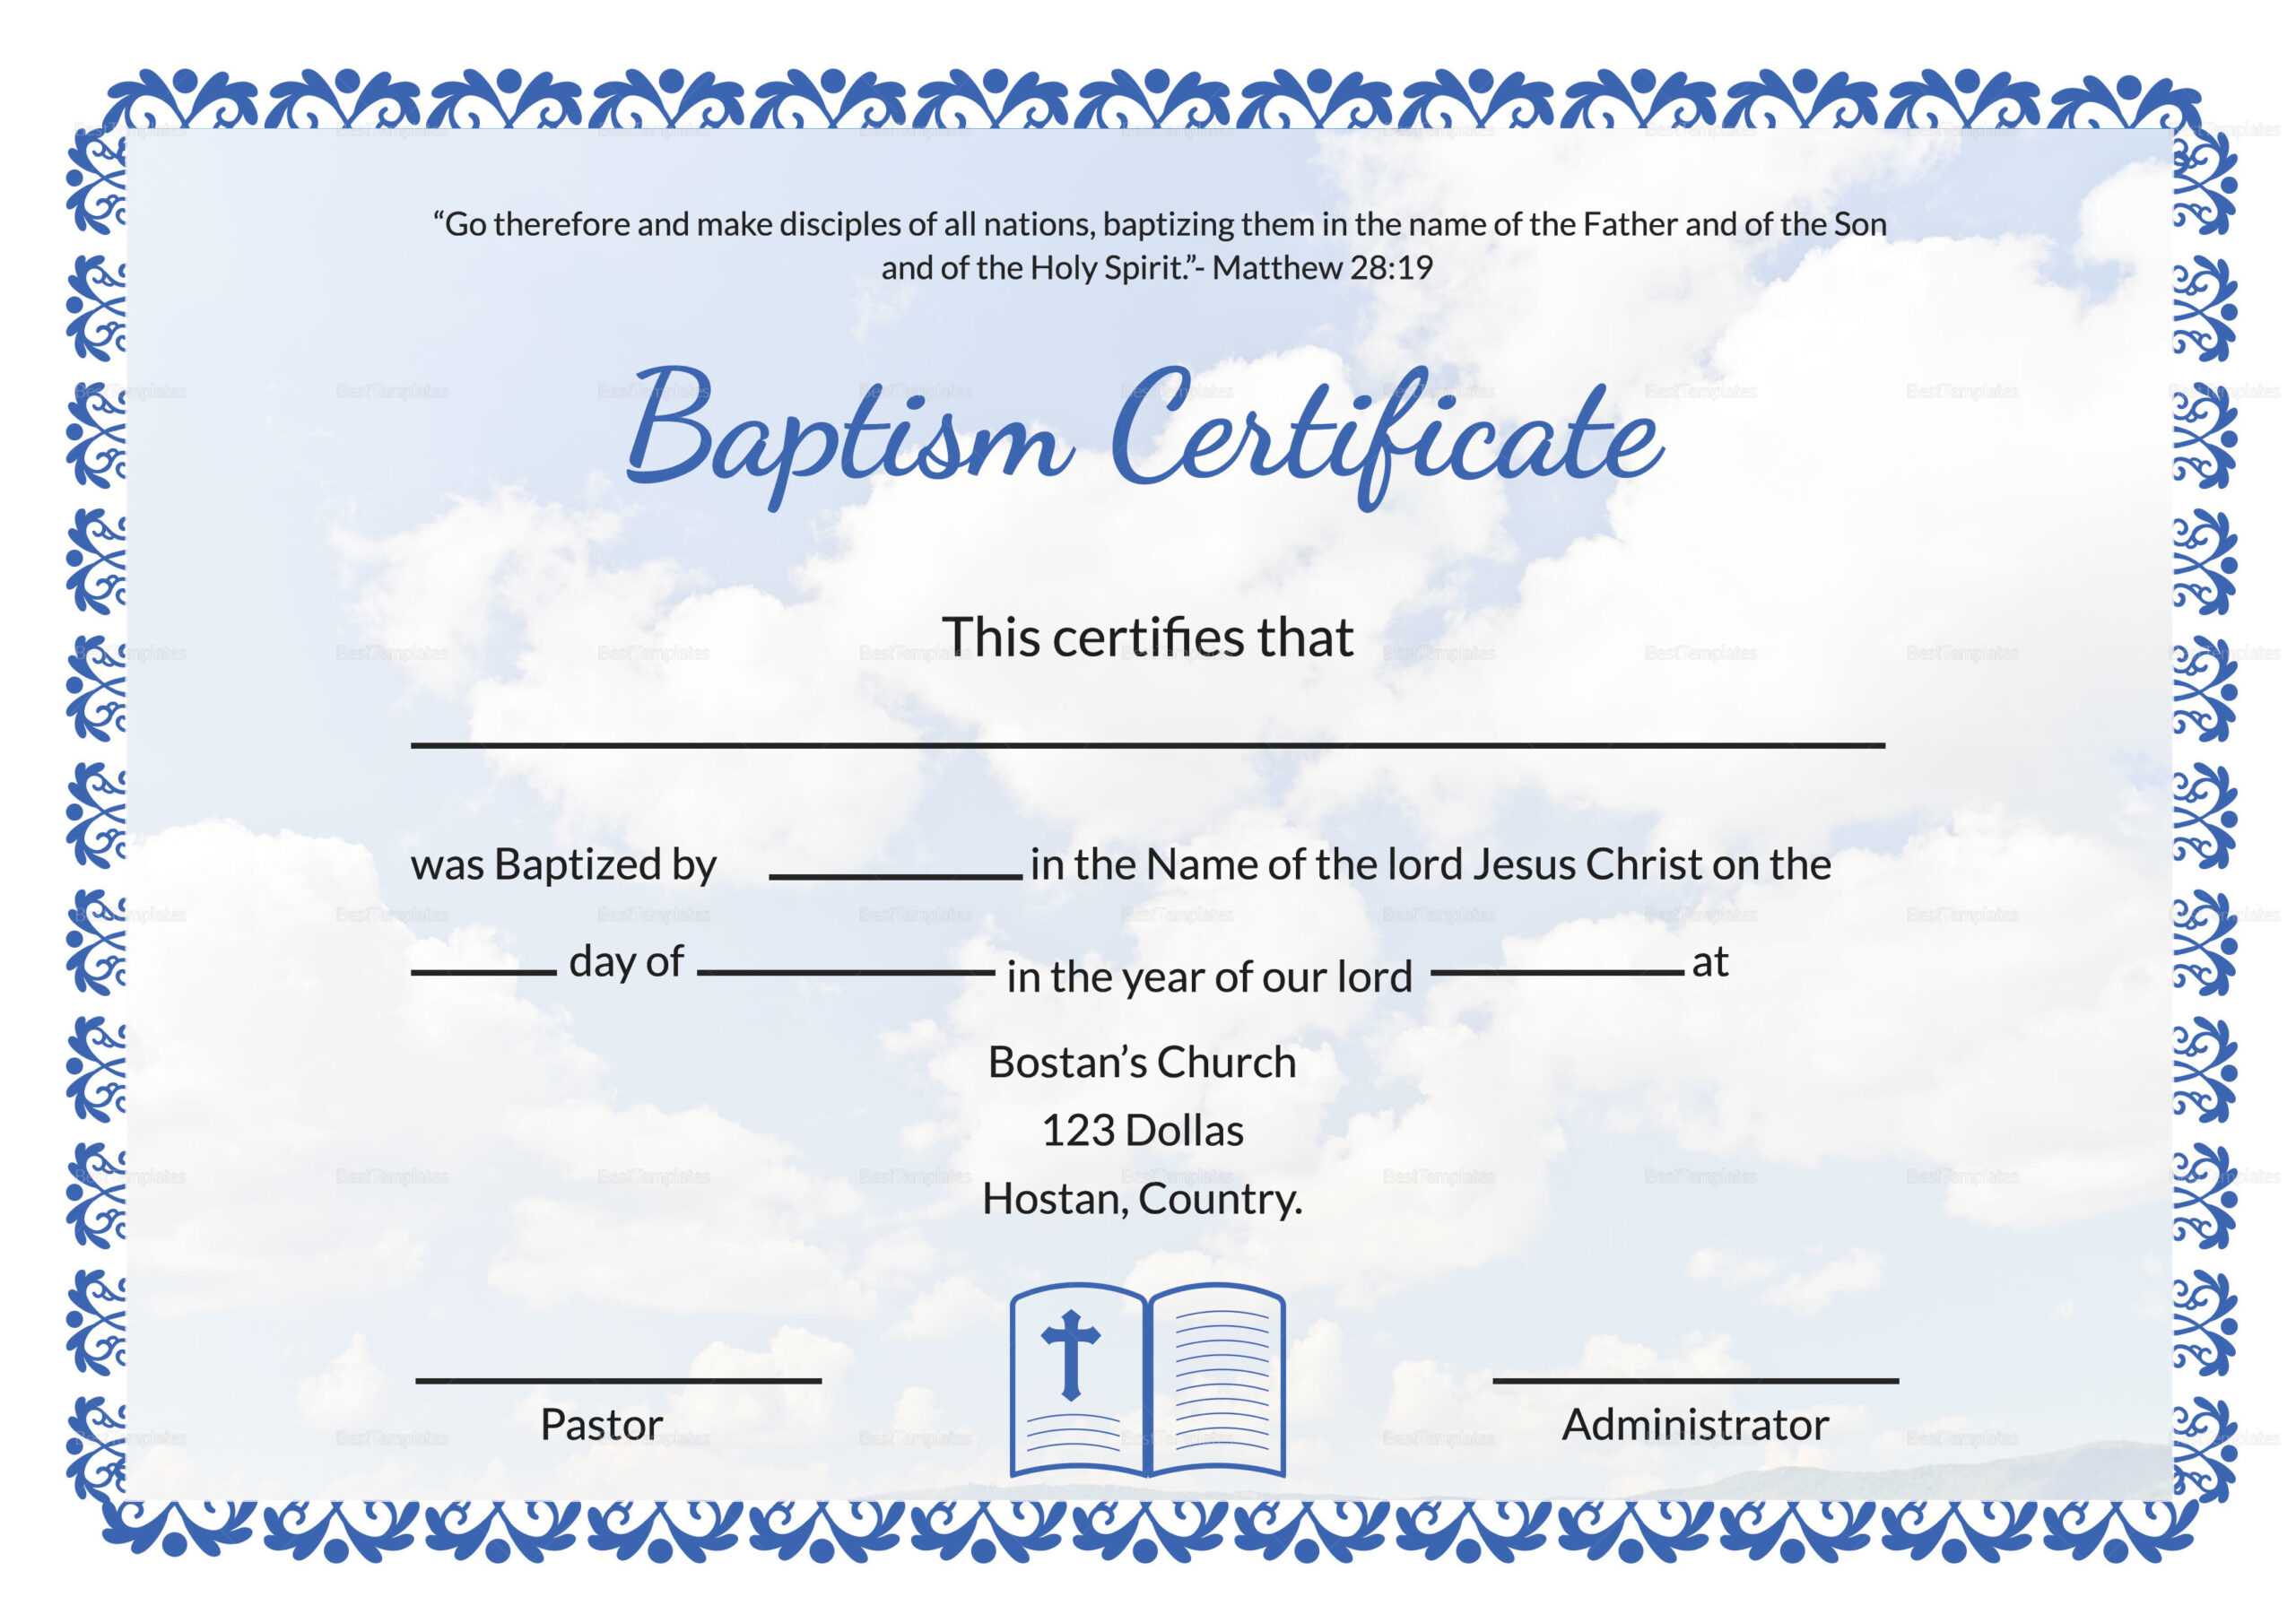 Baptism Certificate Template Word - Cumed Intended For Baptism Certificate Template Word